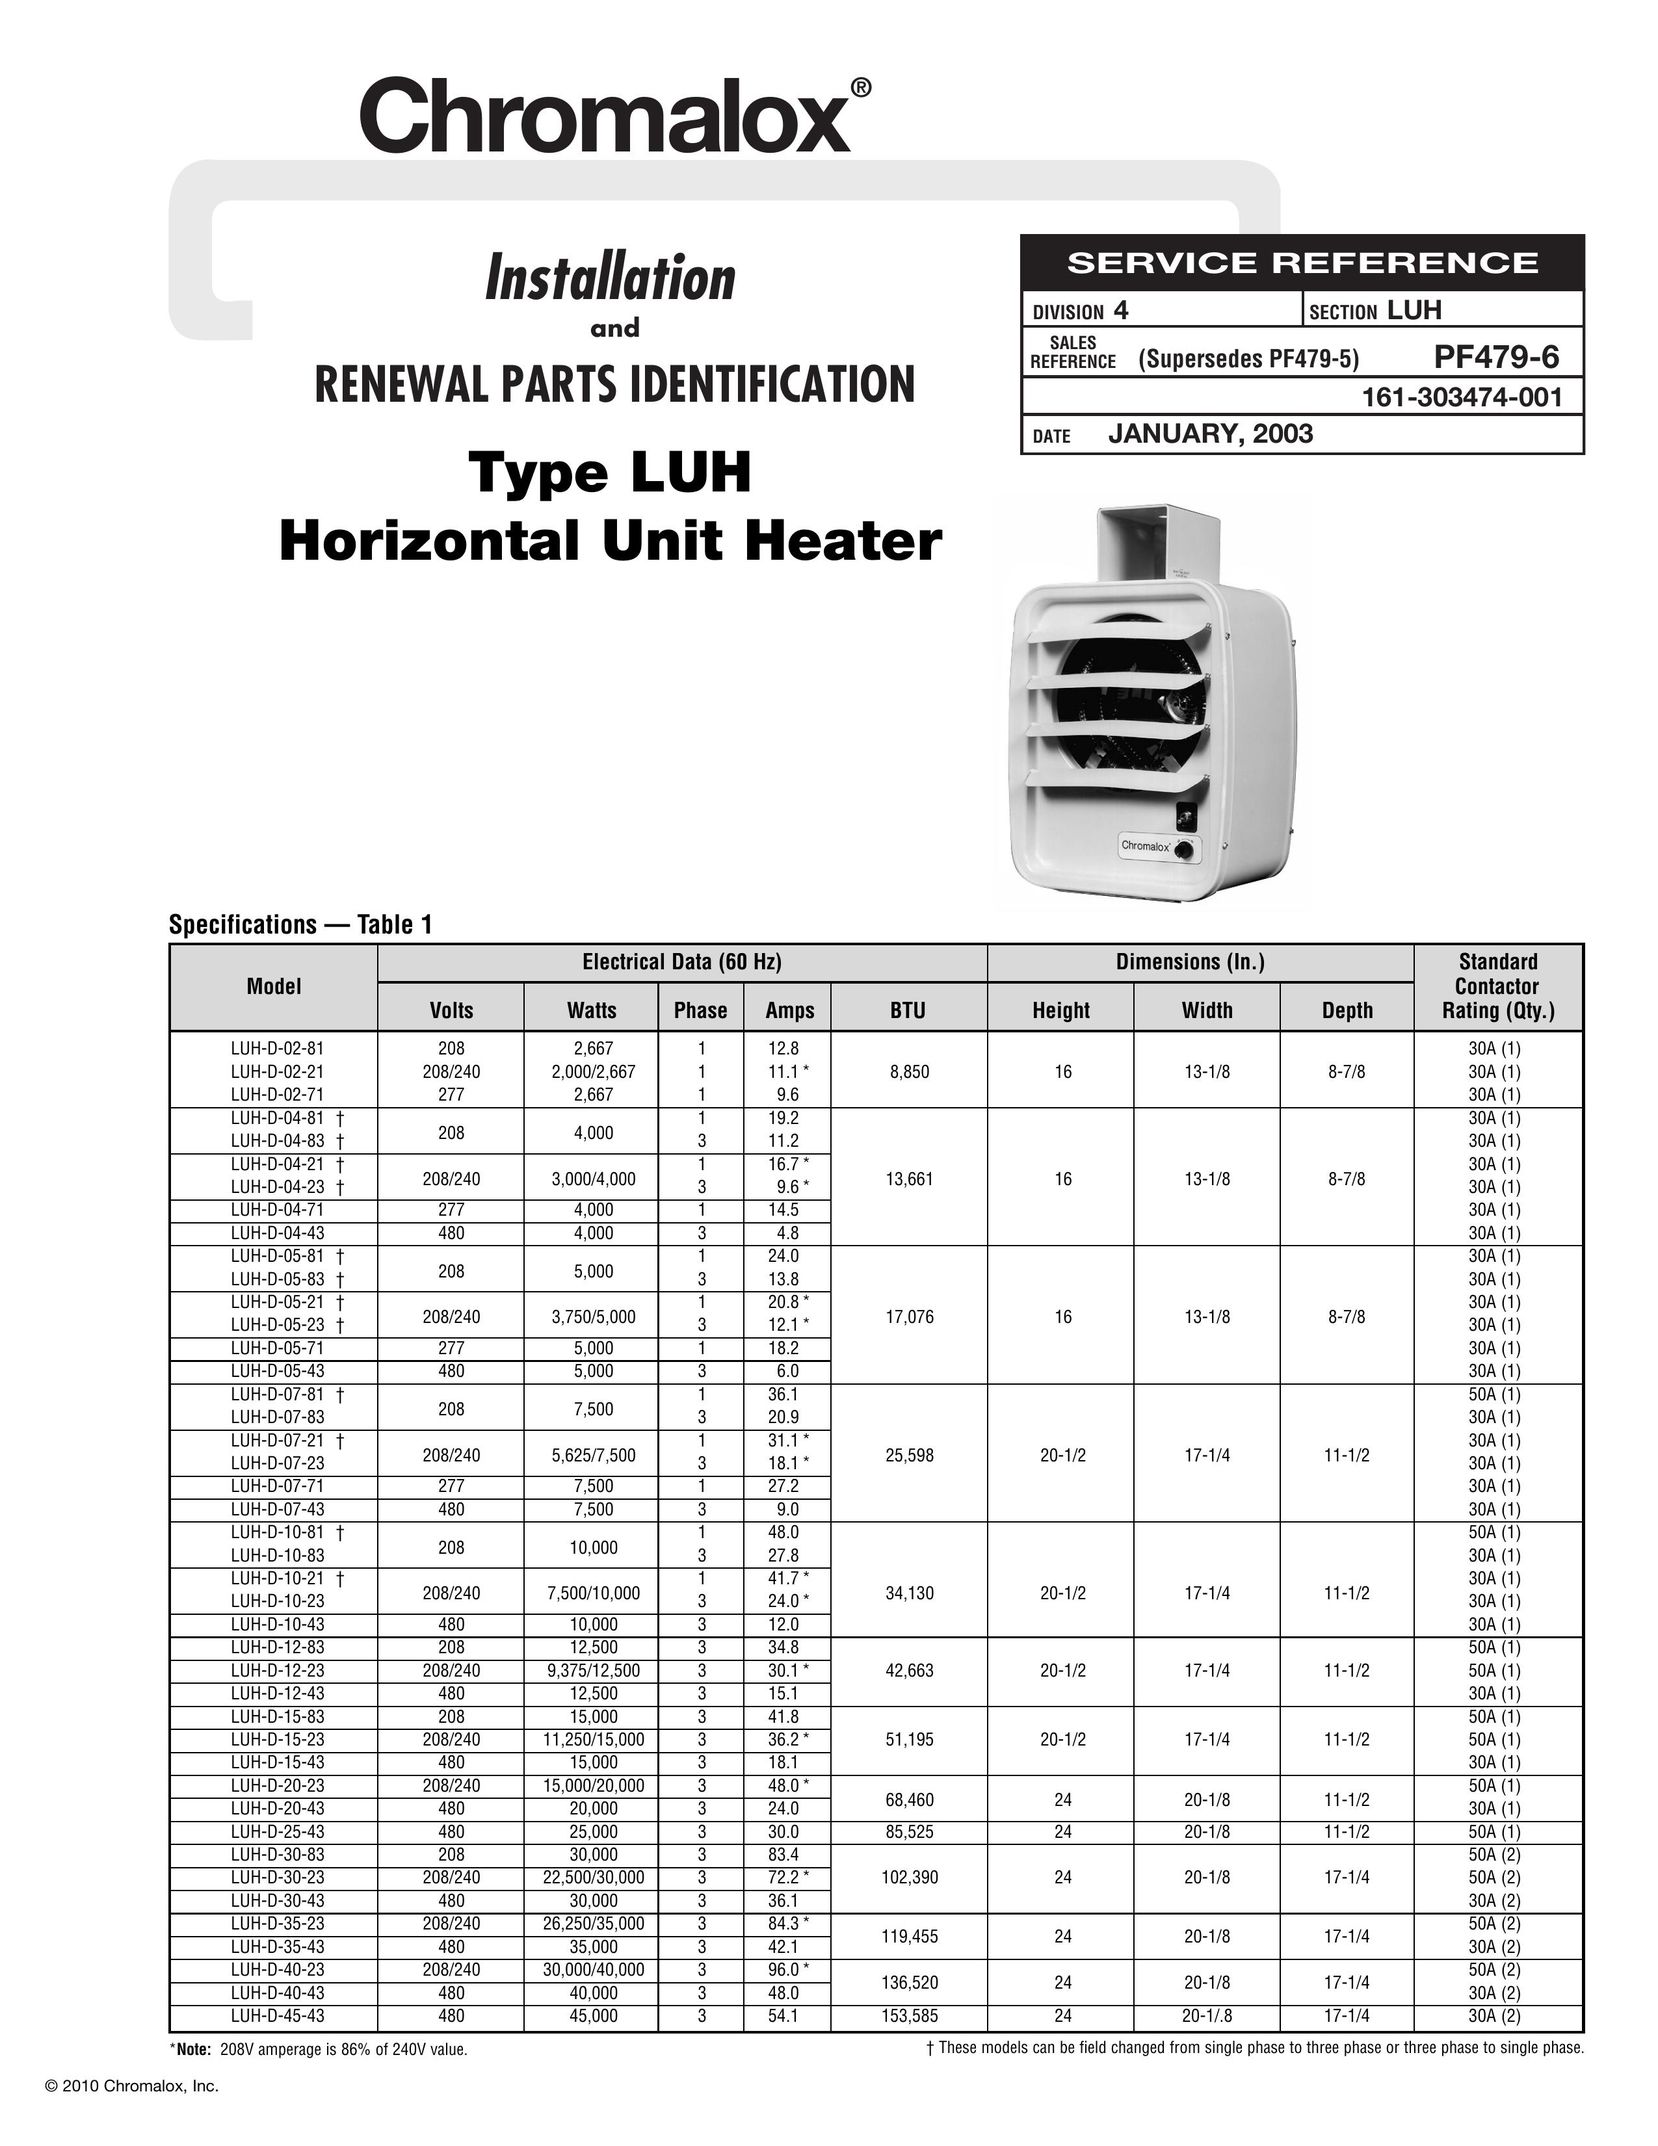 Chromalox PF479-6 Air Conditioner User Manual